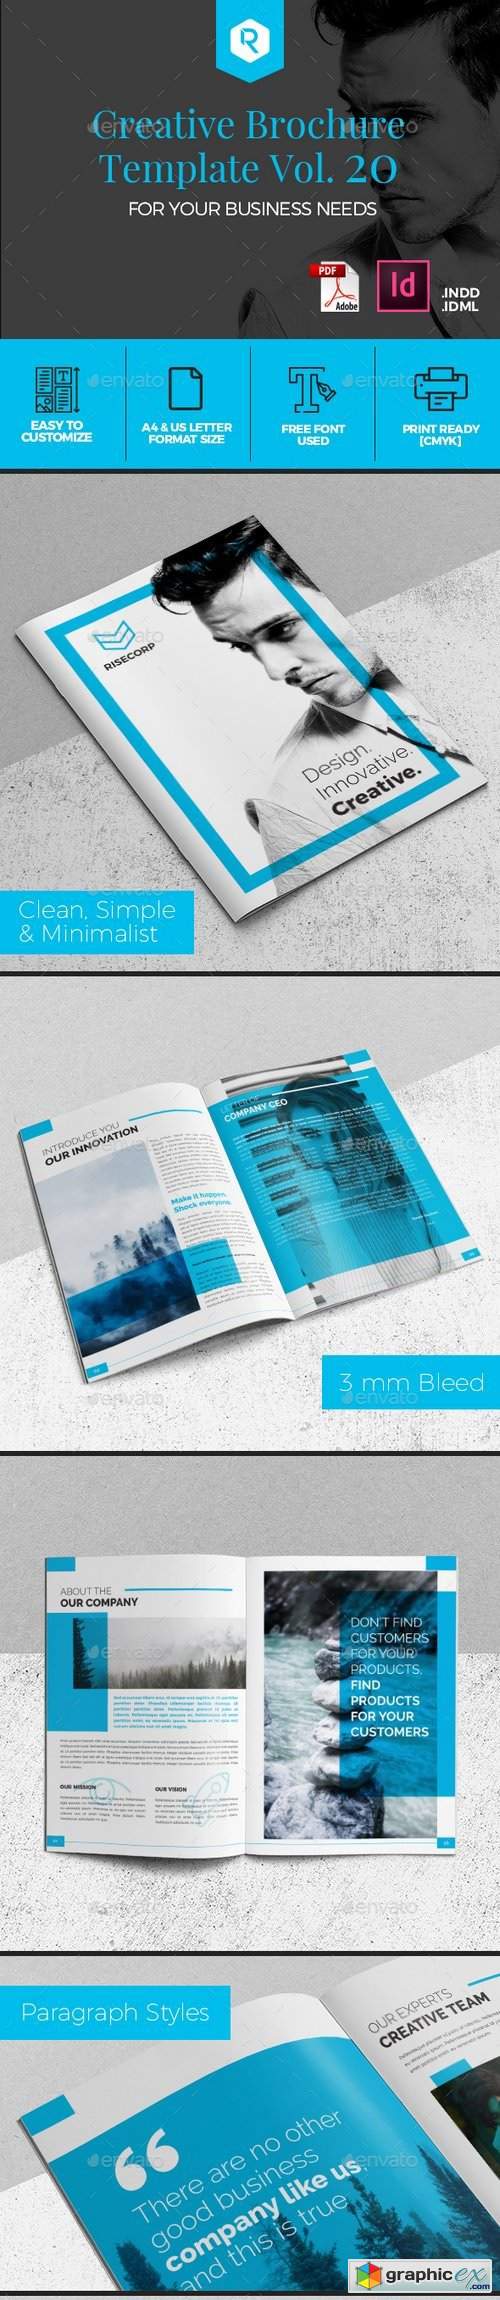 Creative Brochure Template Vol. 20